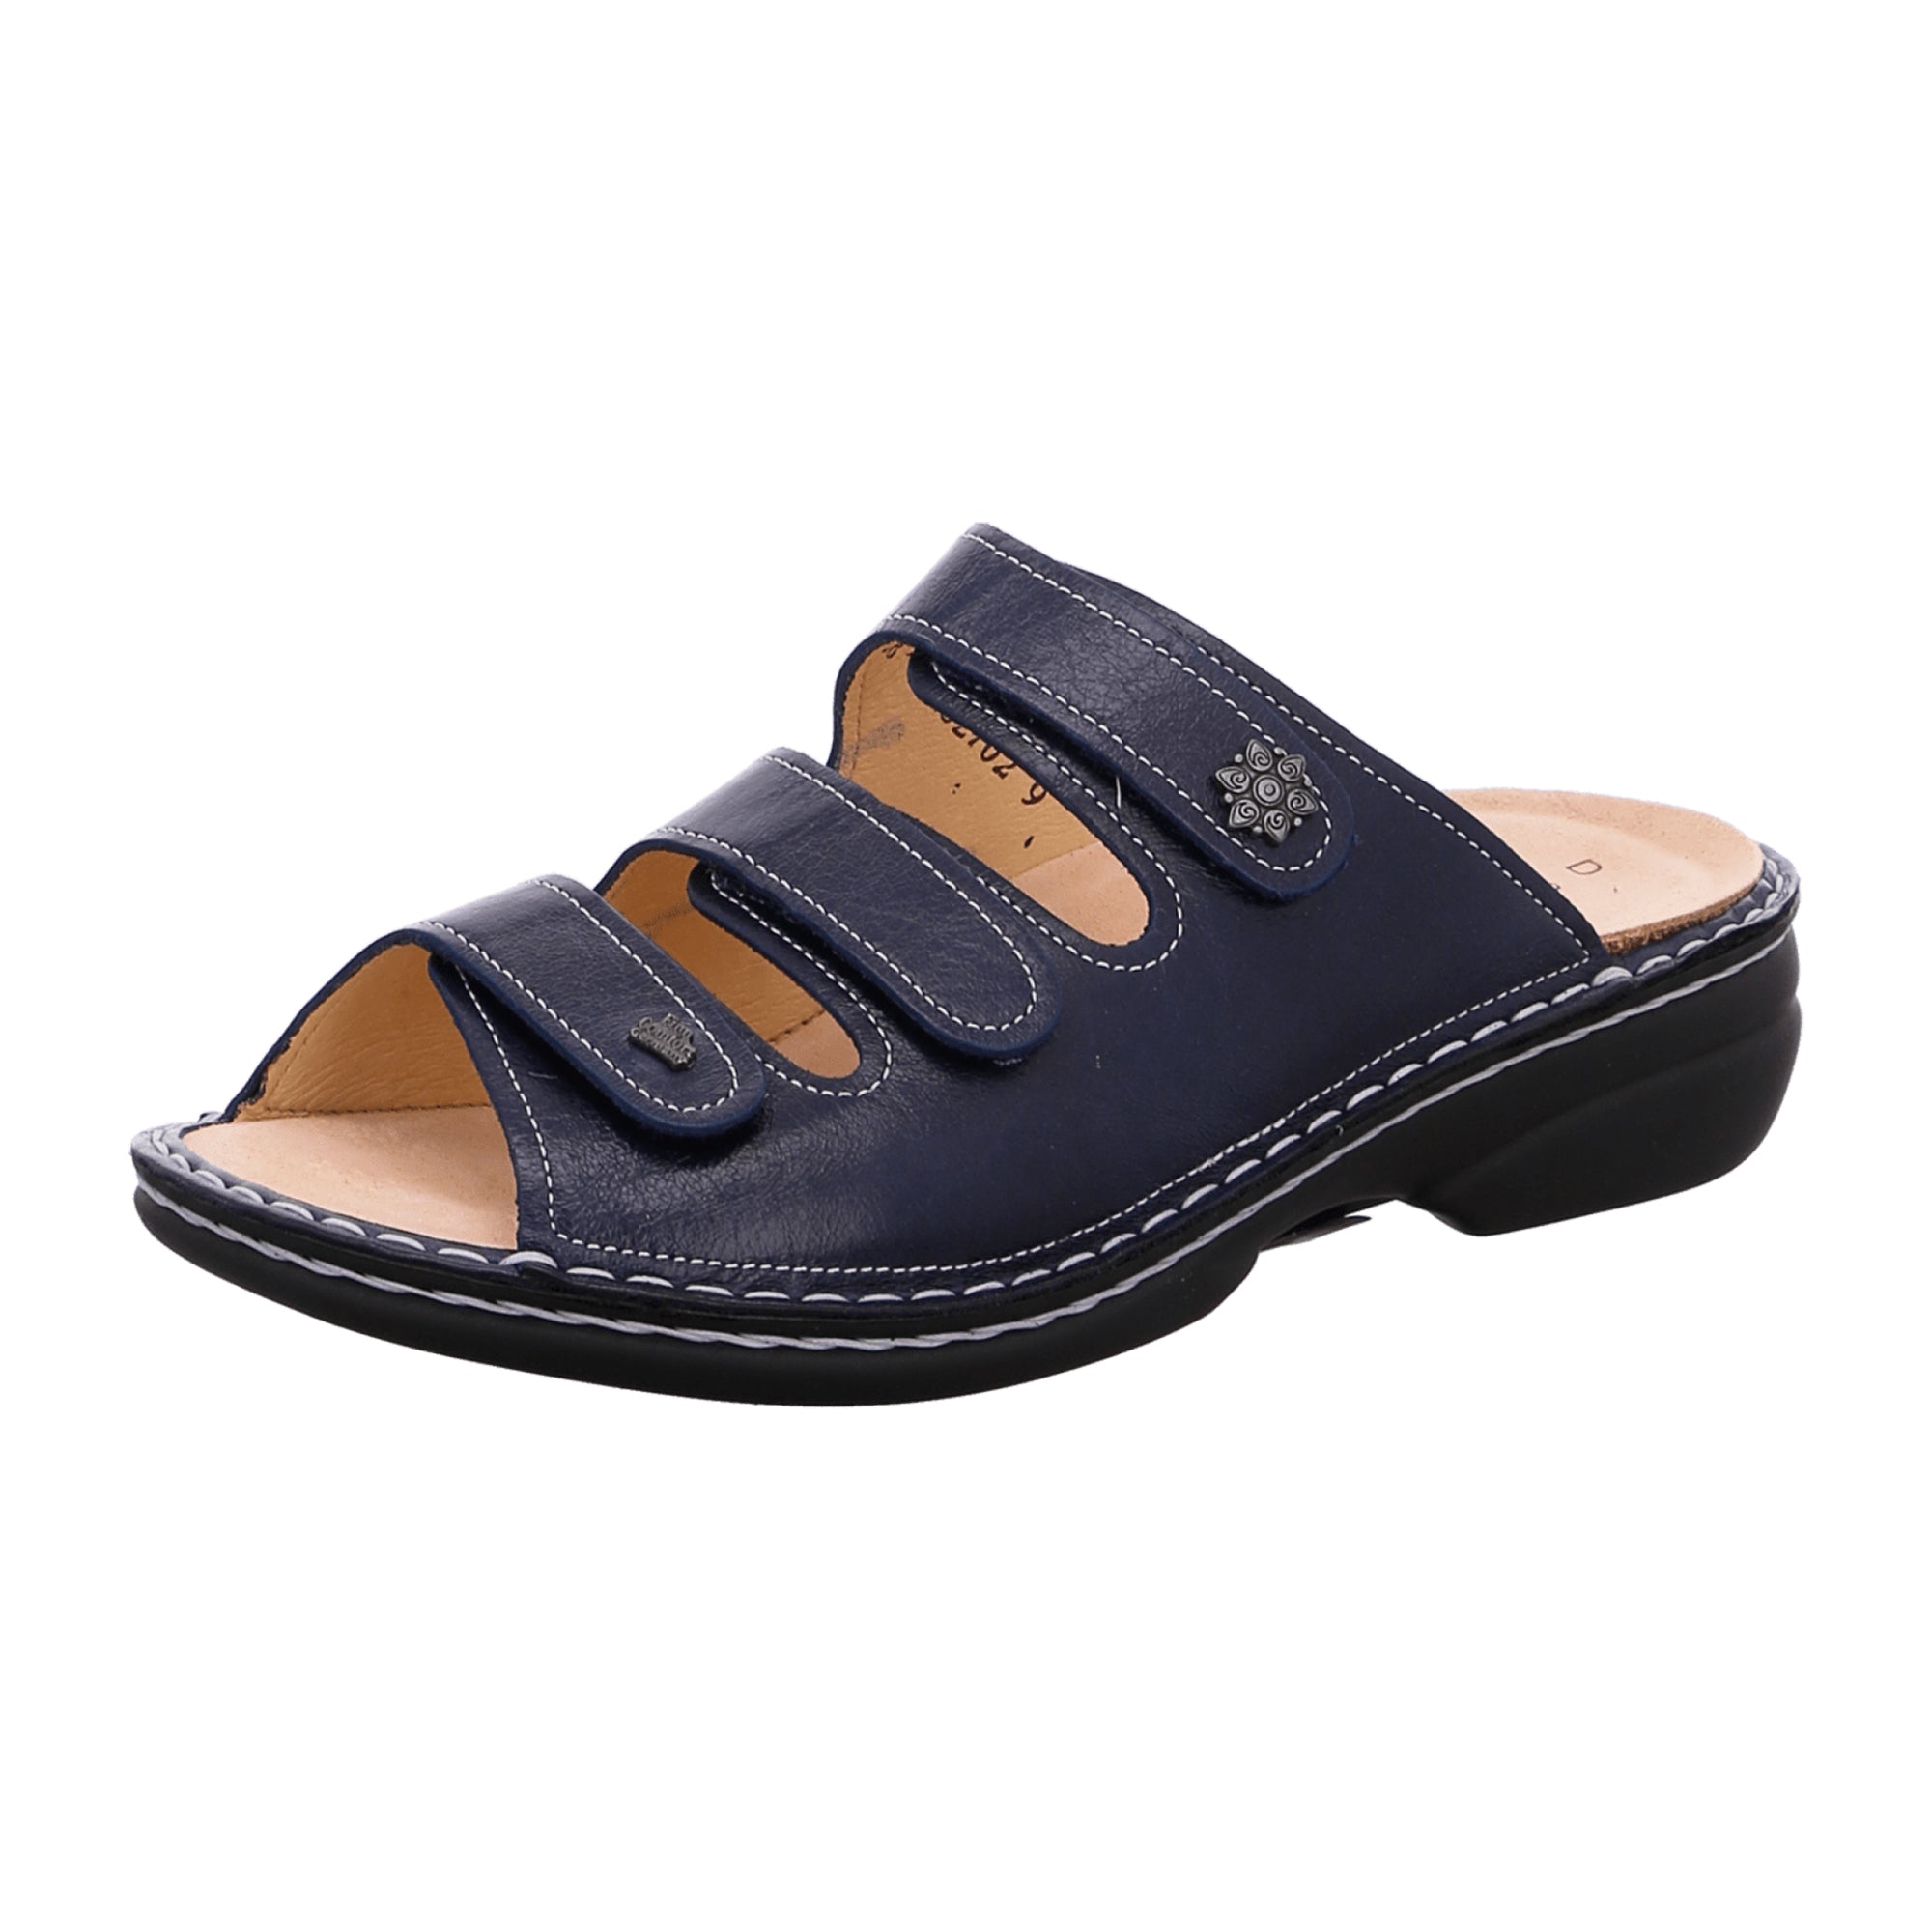 Finn Comfort Menorca-S Women's Sandals, Stylish & Comfortable, Blue